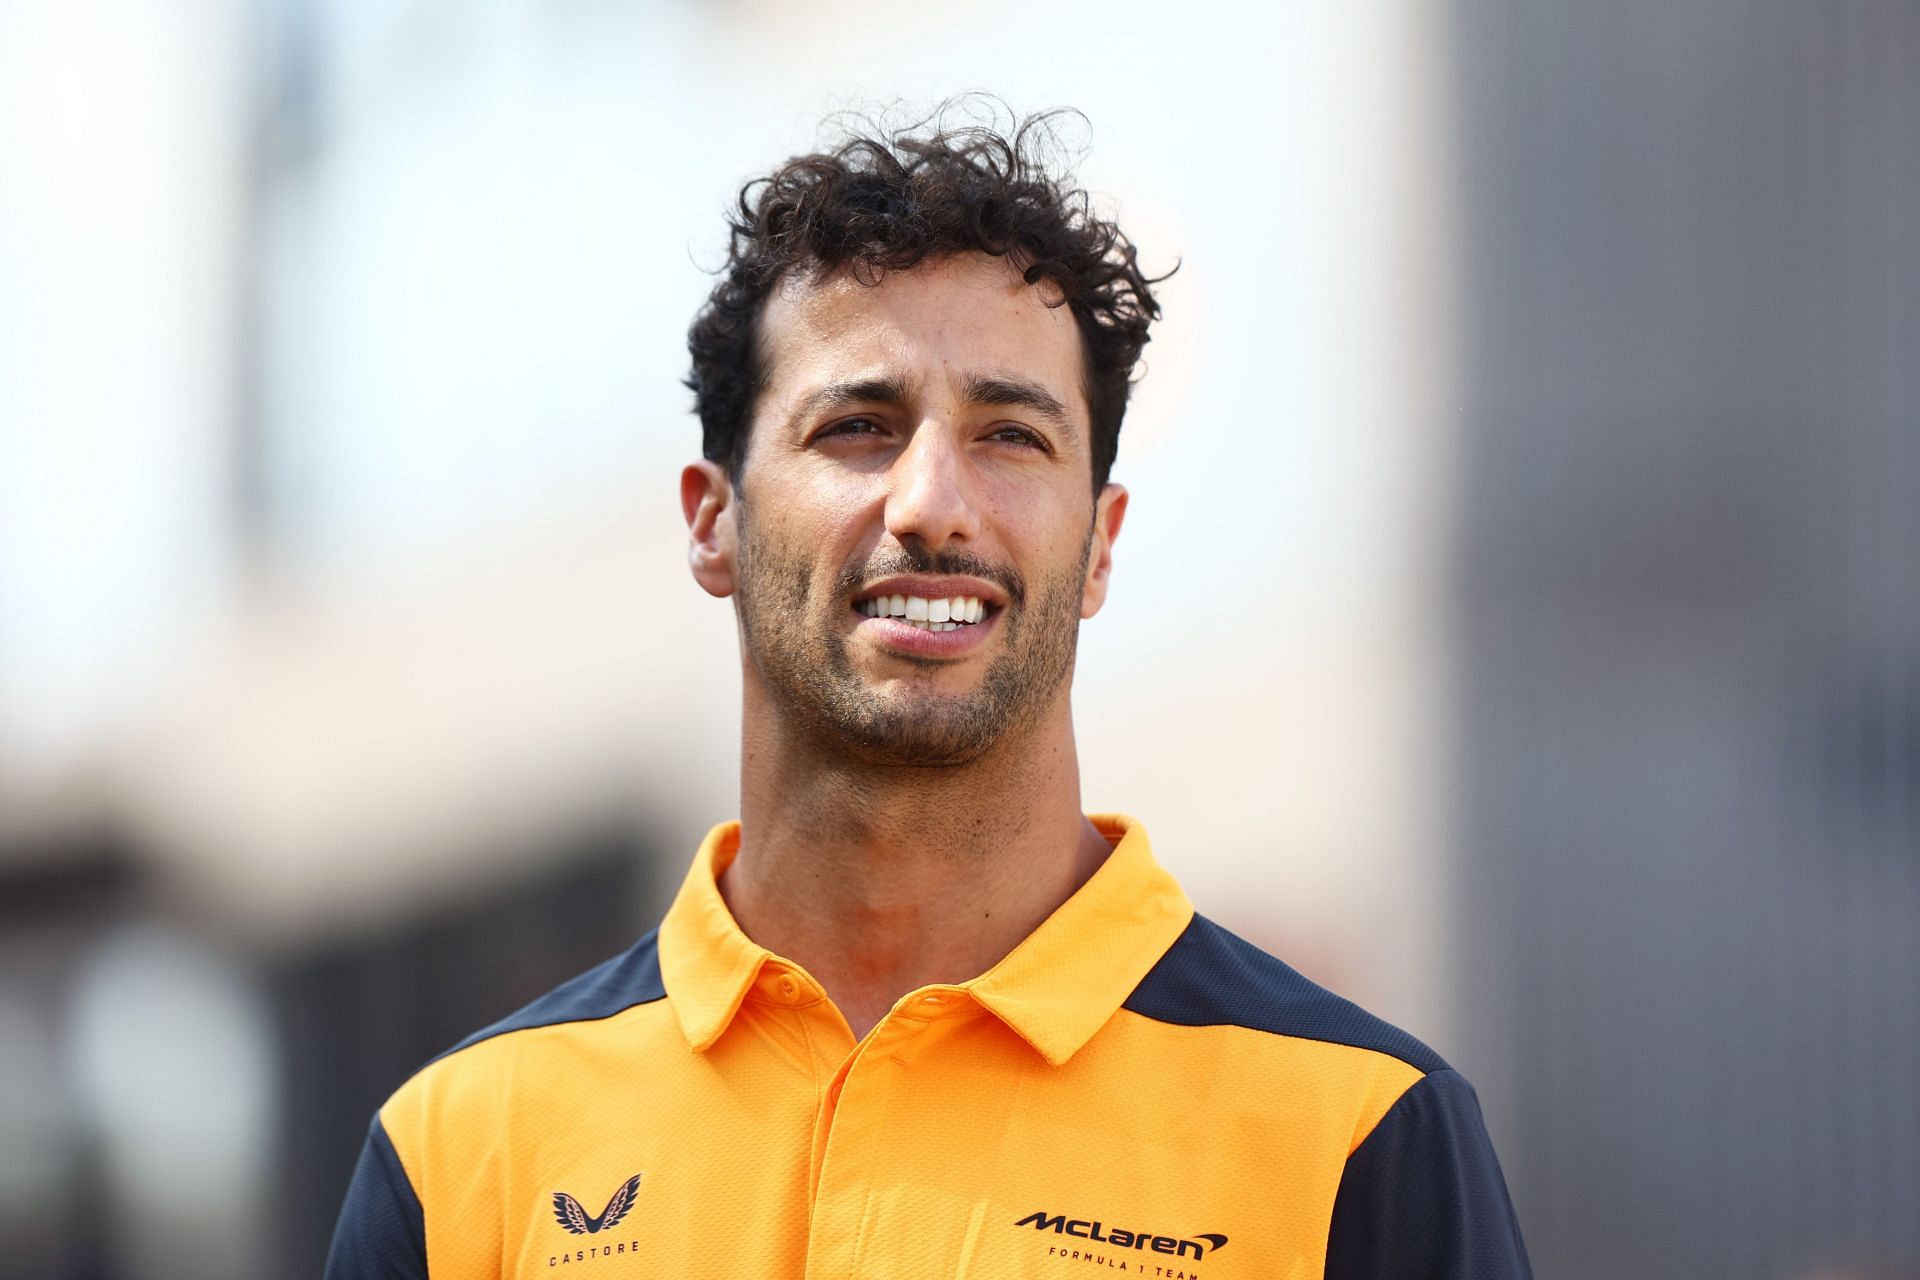 2022 F1 Grand Prix of Hungary - Daniel Ricciardo struggled to find pace at the Hungaroring